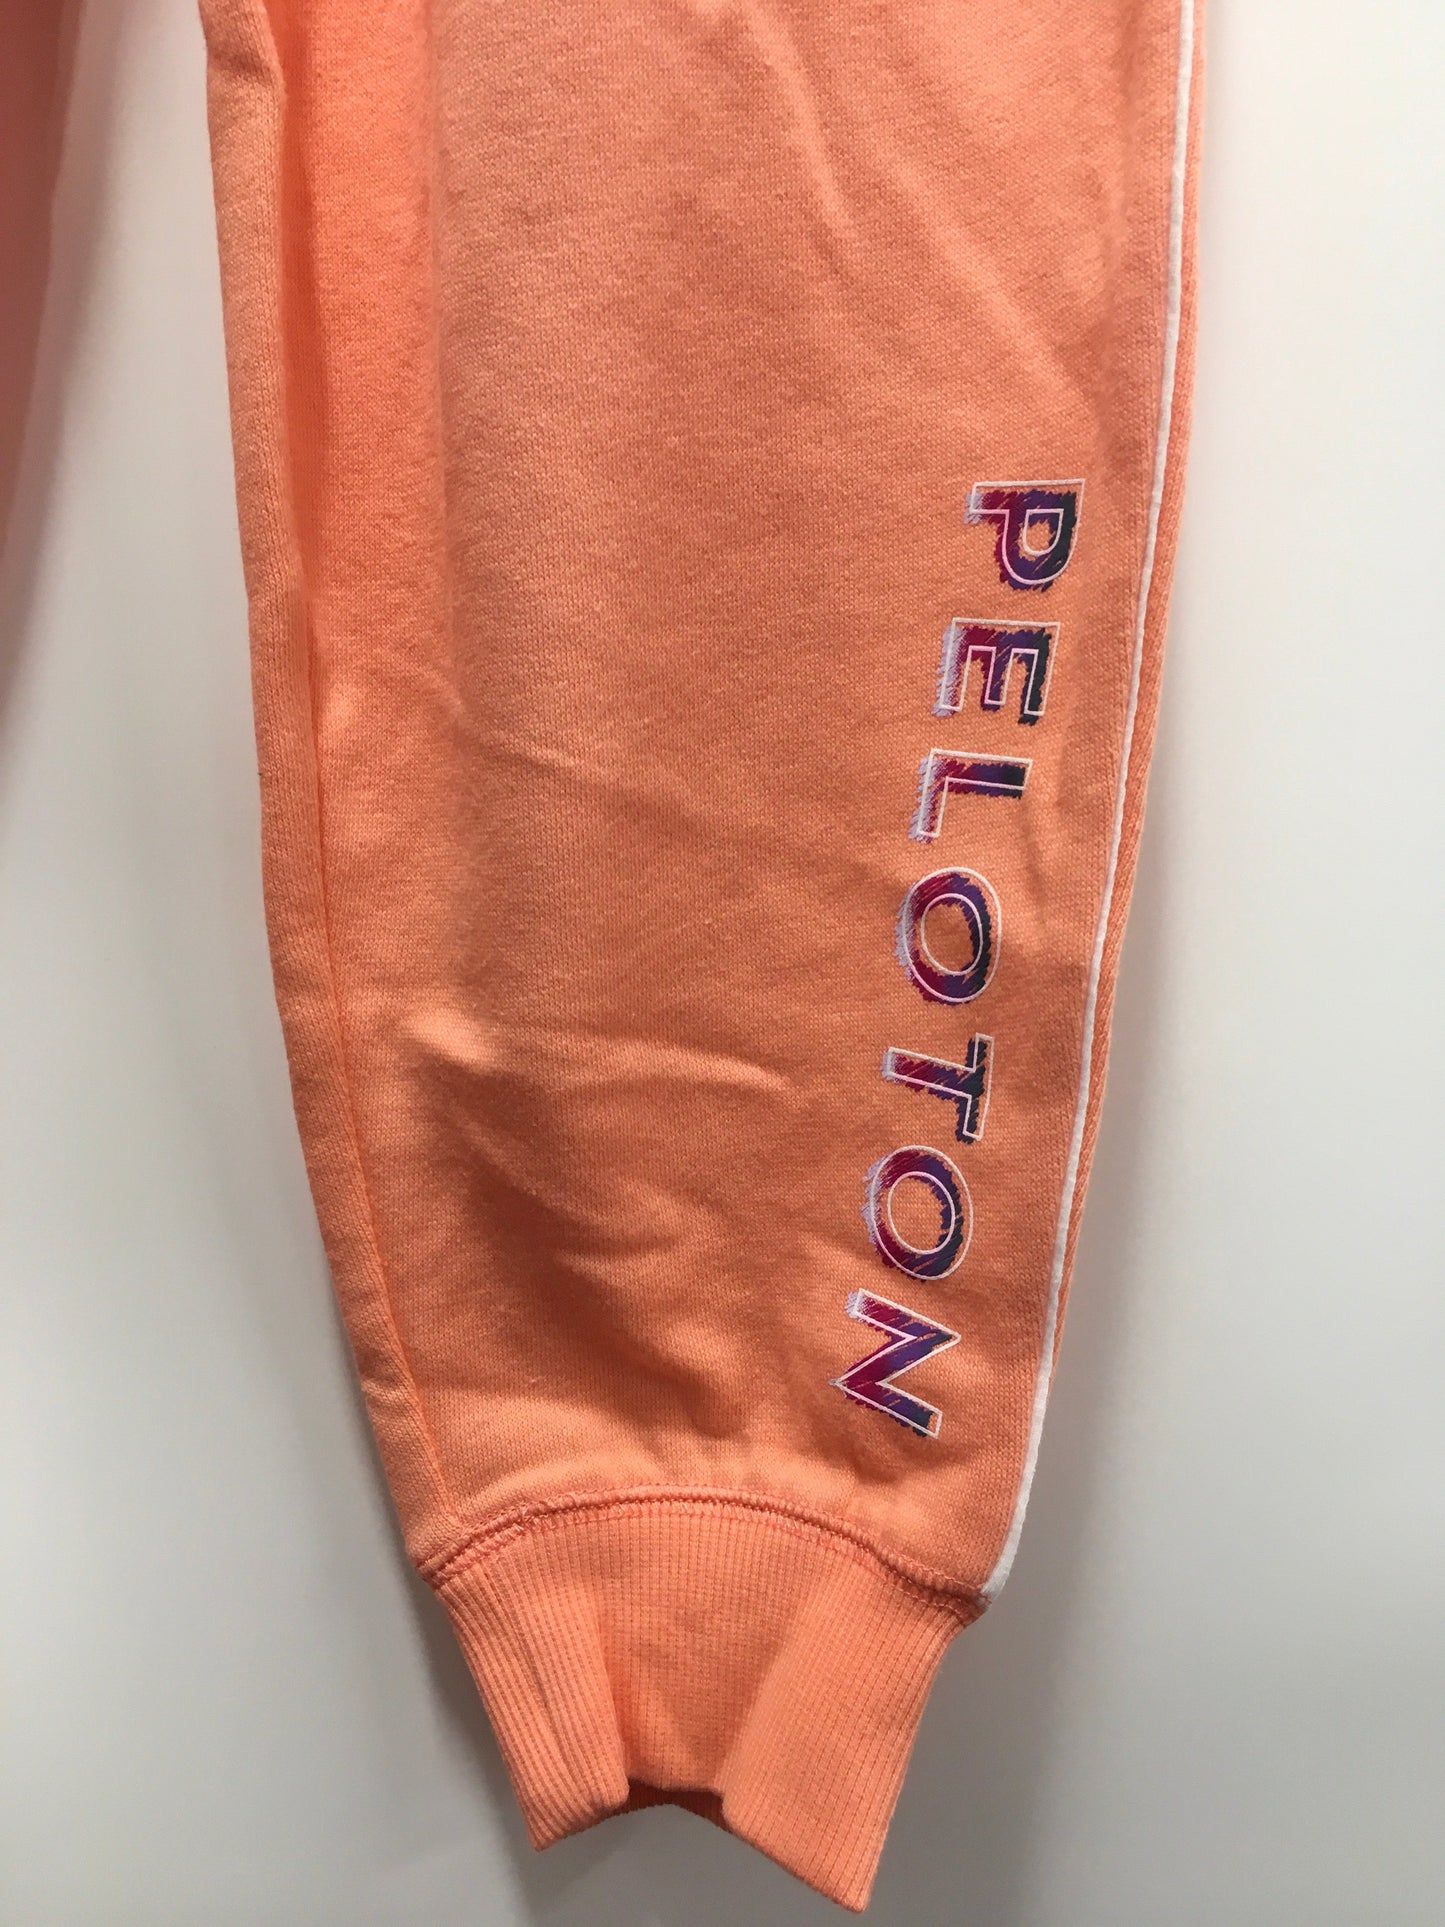 Athletic Pants By Peloton Size: S